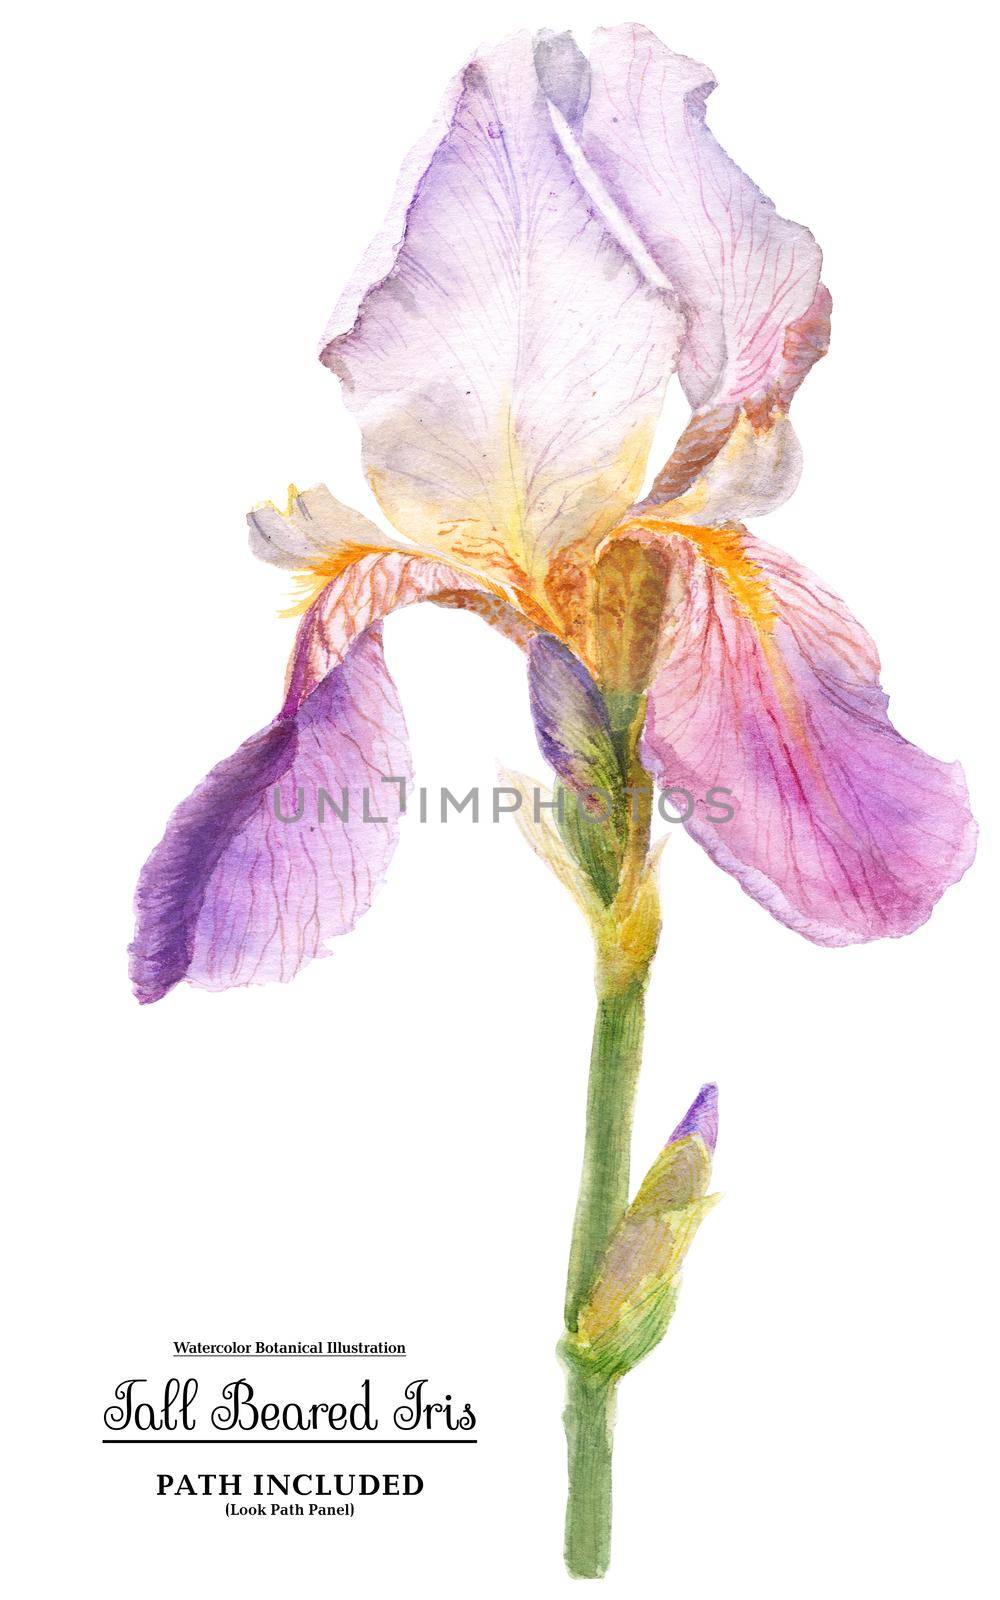 Tall Bearded Iris by Xeniasnowstorm